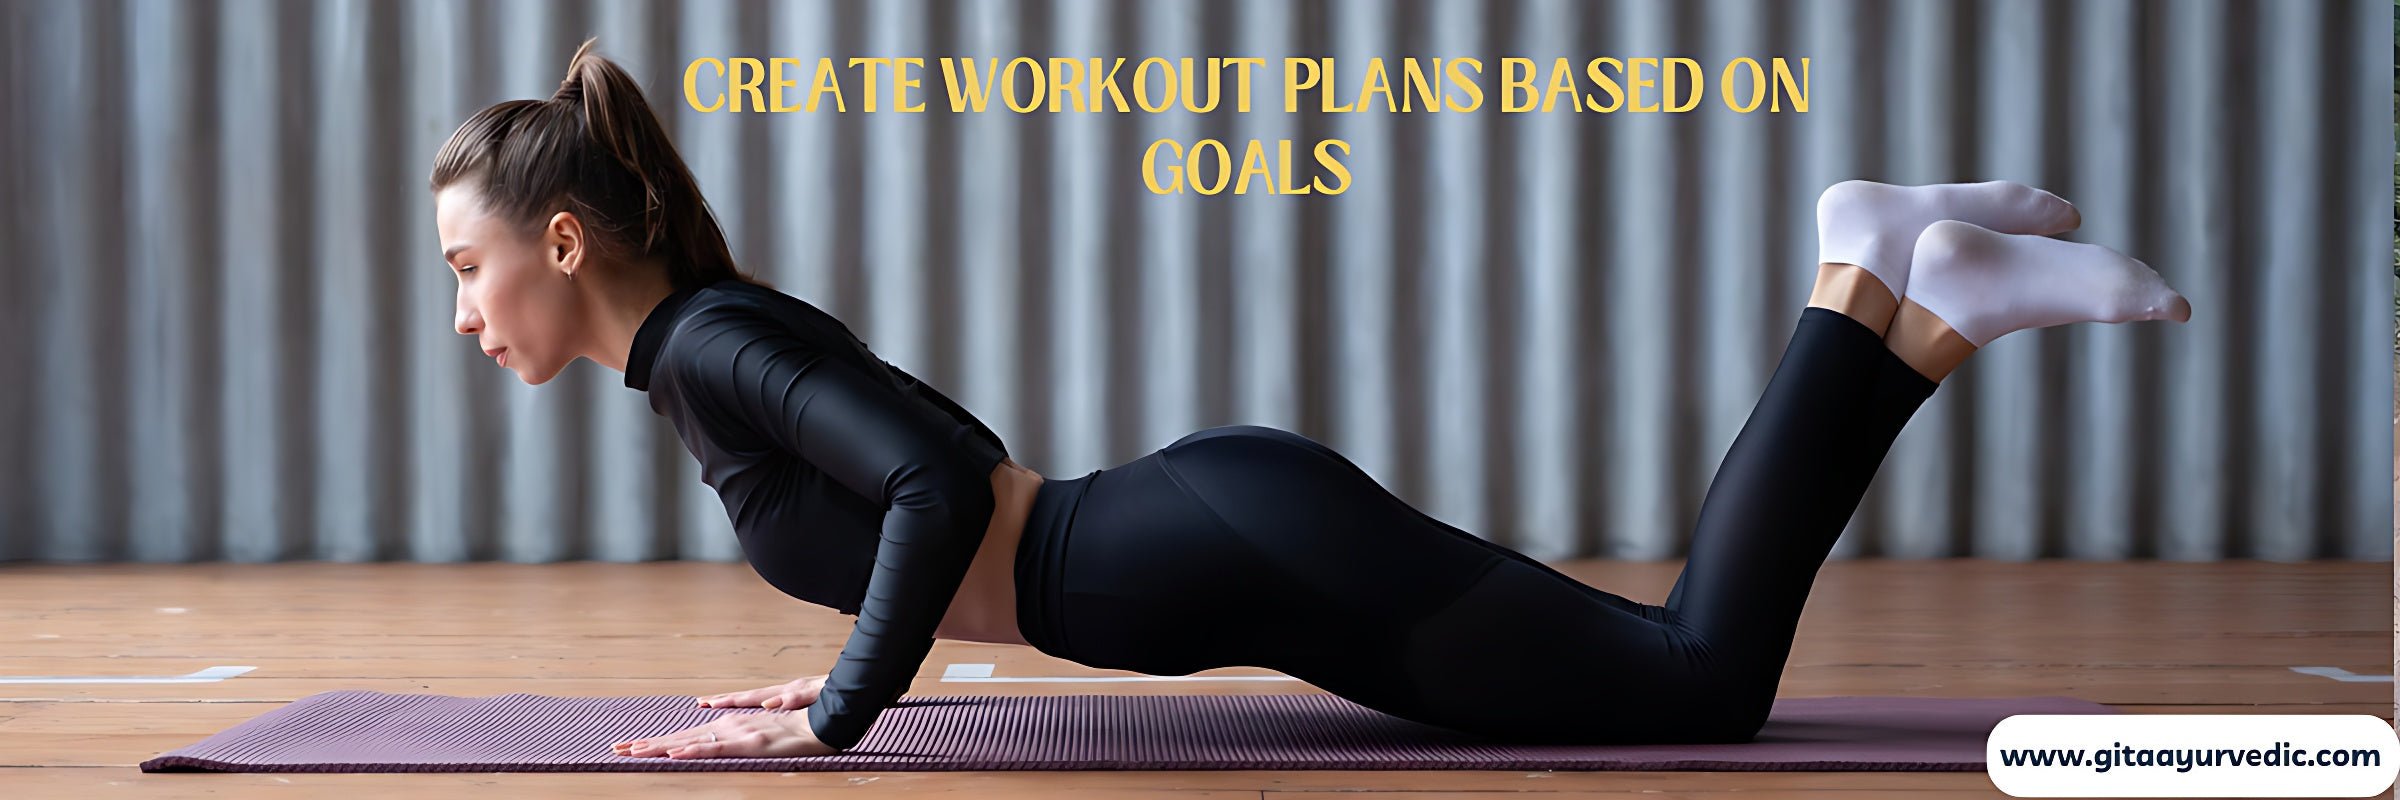 Create workout plans based on goals - gitaayurvedic.com